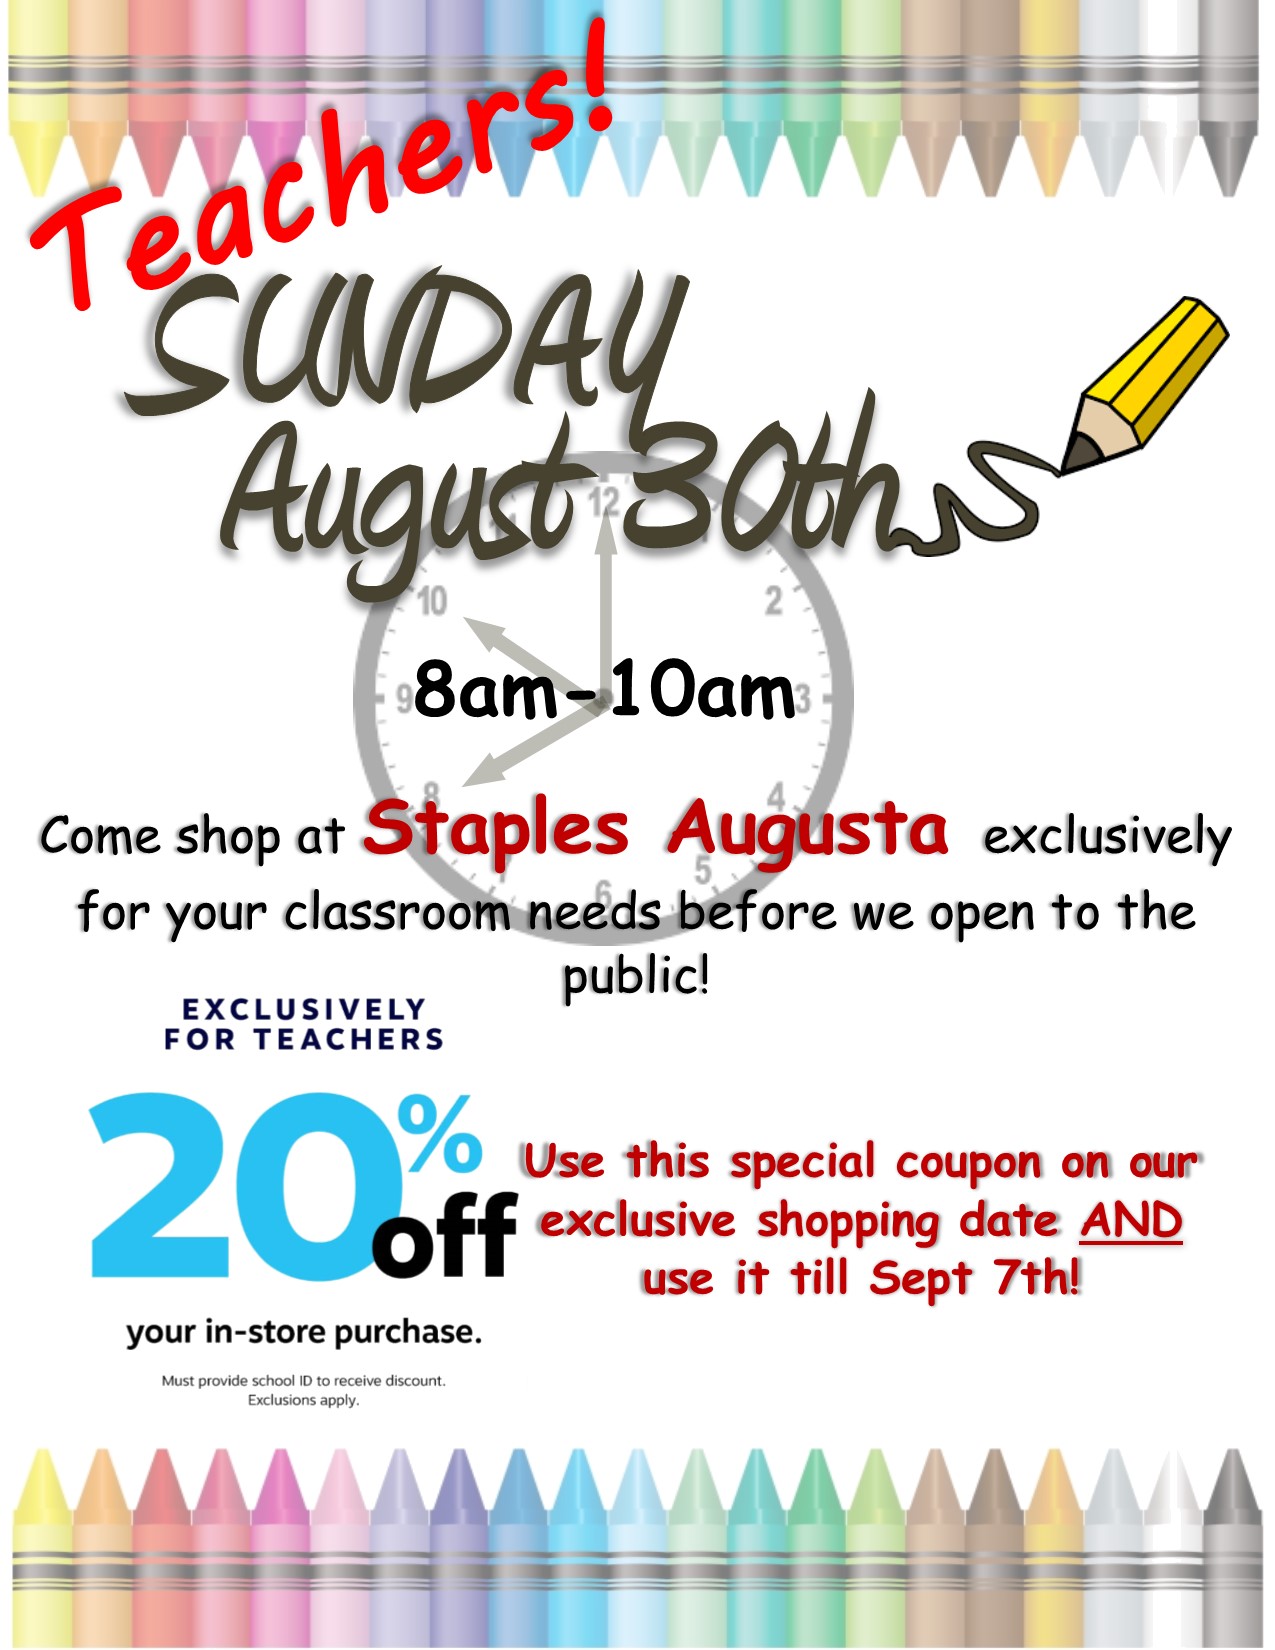 staples teacher event flyer